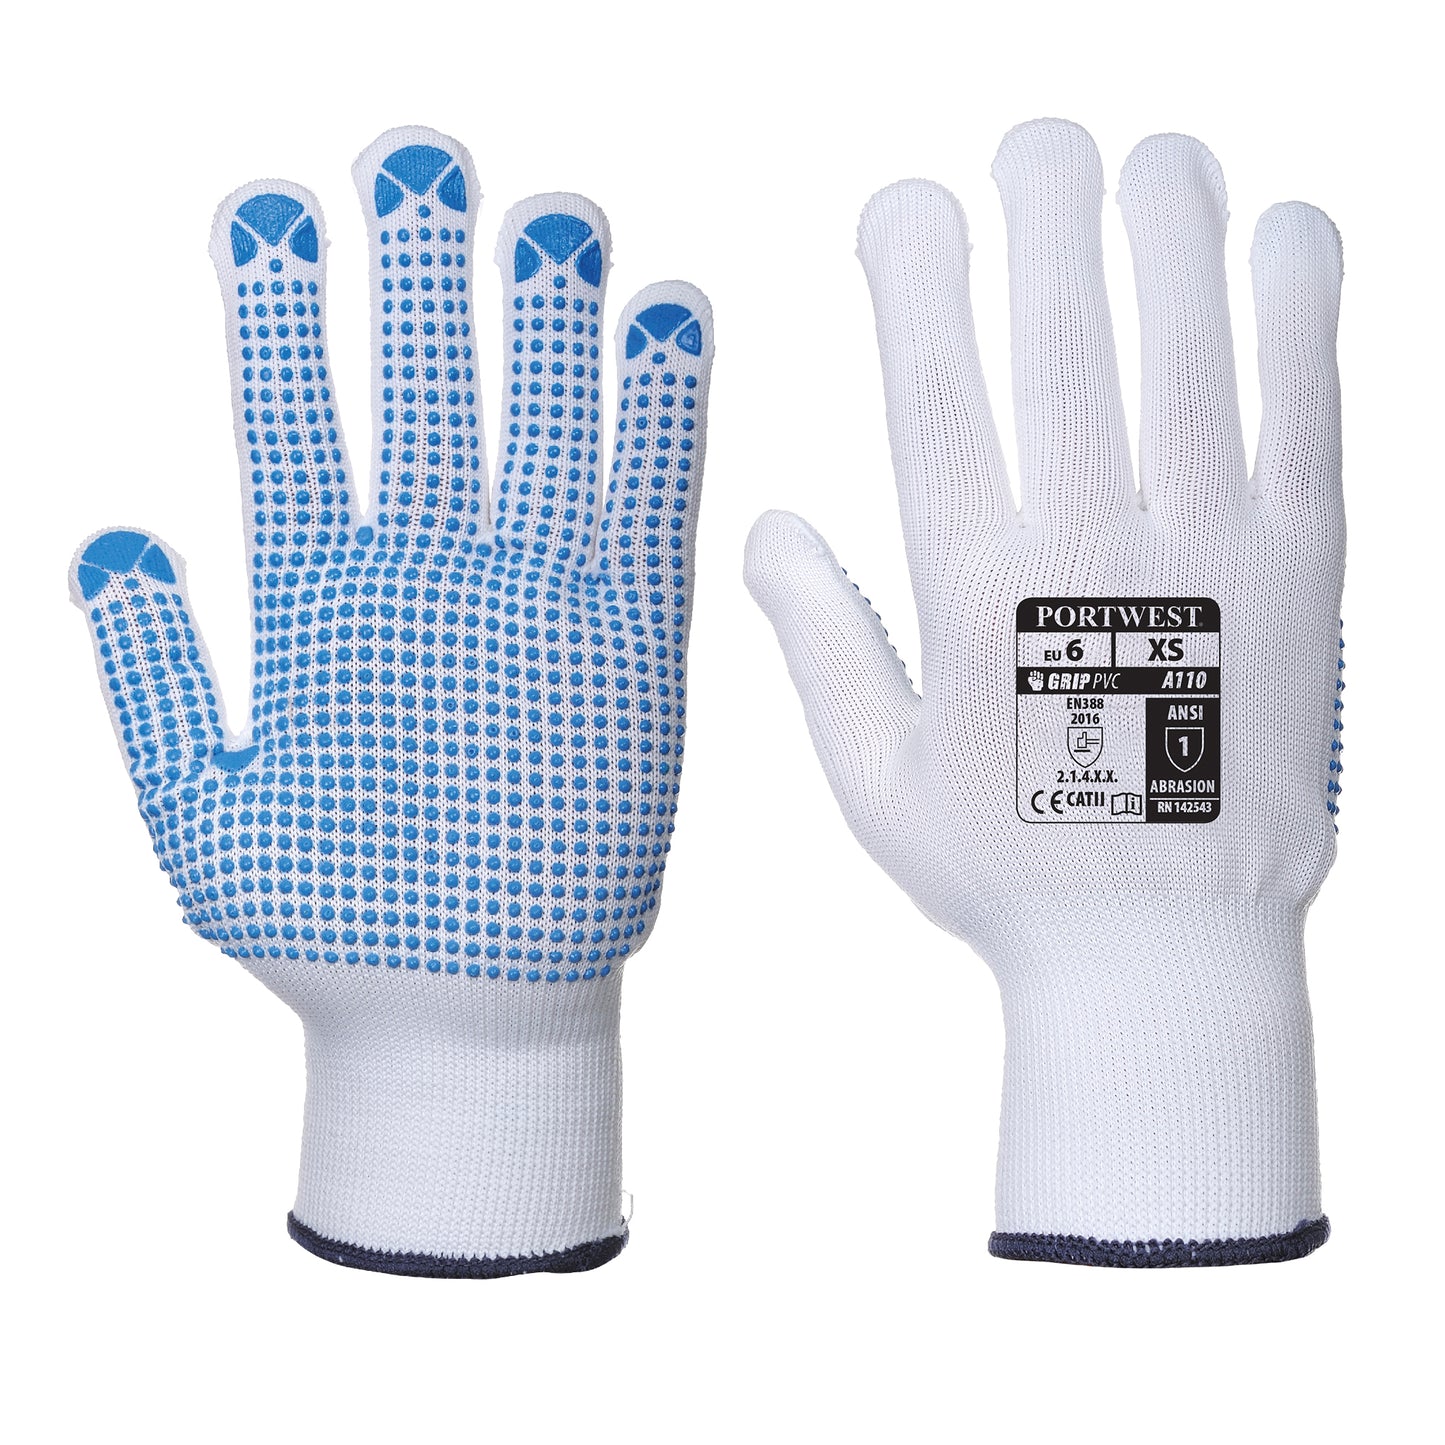 Polka Dot Glove Blue/White - A110 Palm & Back